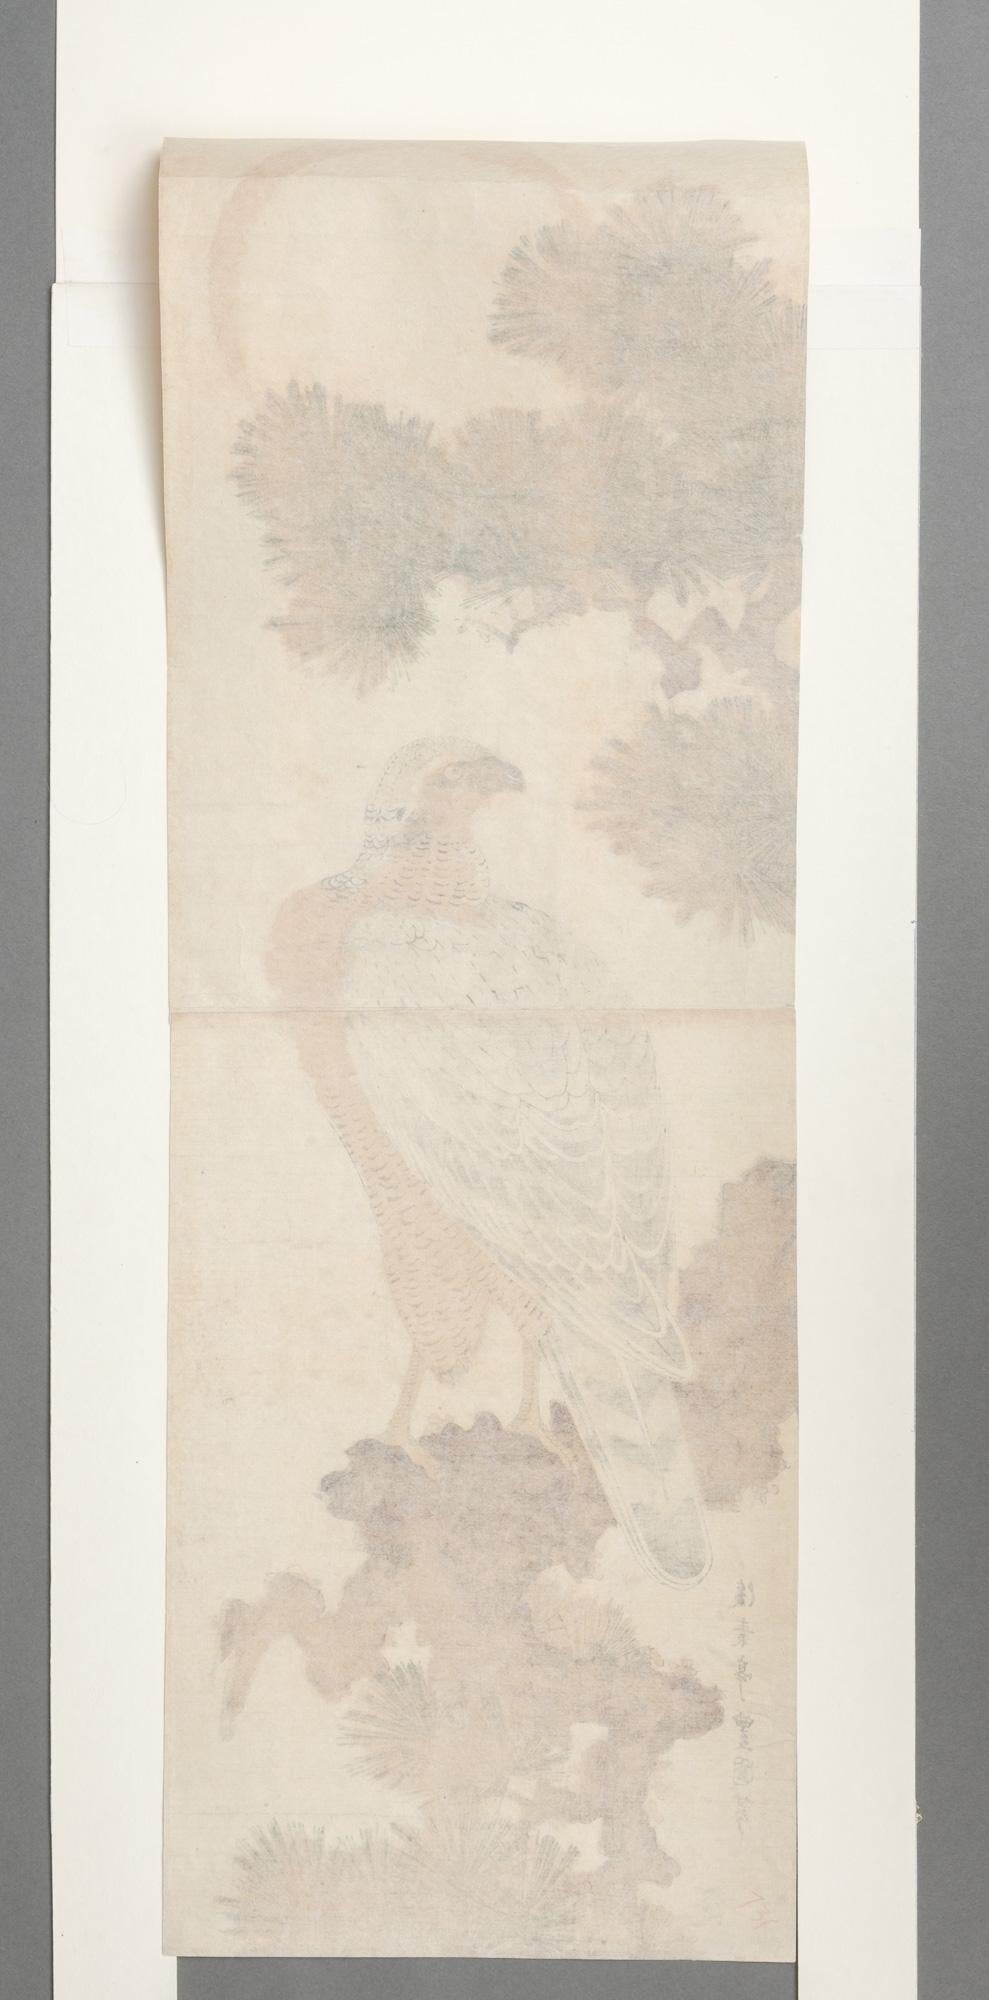 Paper Japanese Woodblock Print of a Falcon by Utagawa Toyoshige 歌川豊重 'Toyokuni II' For Sale